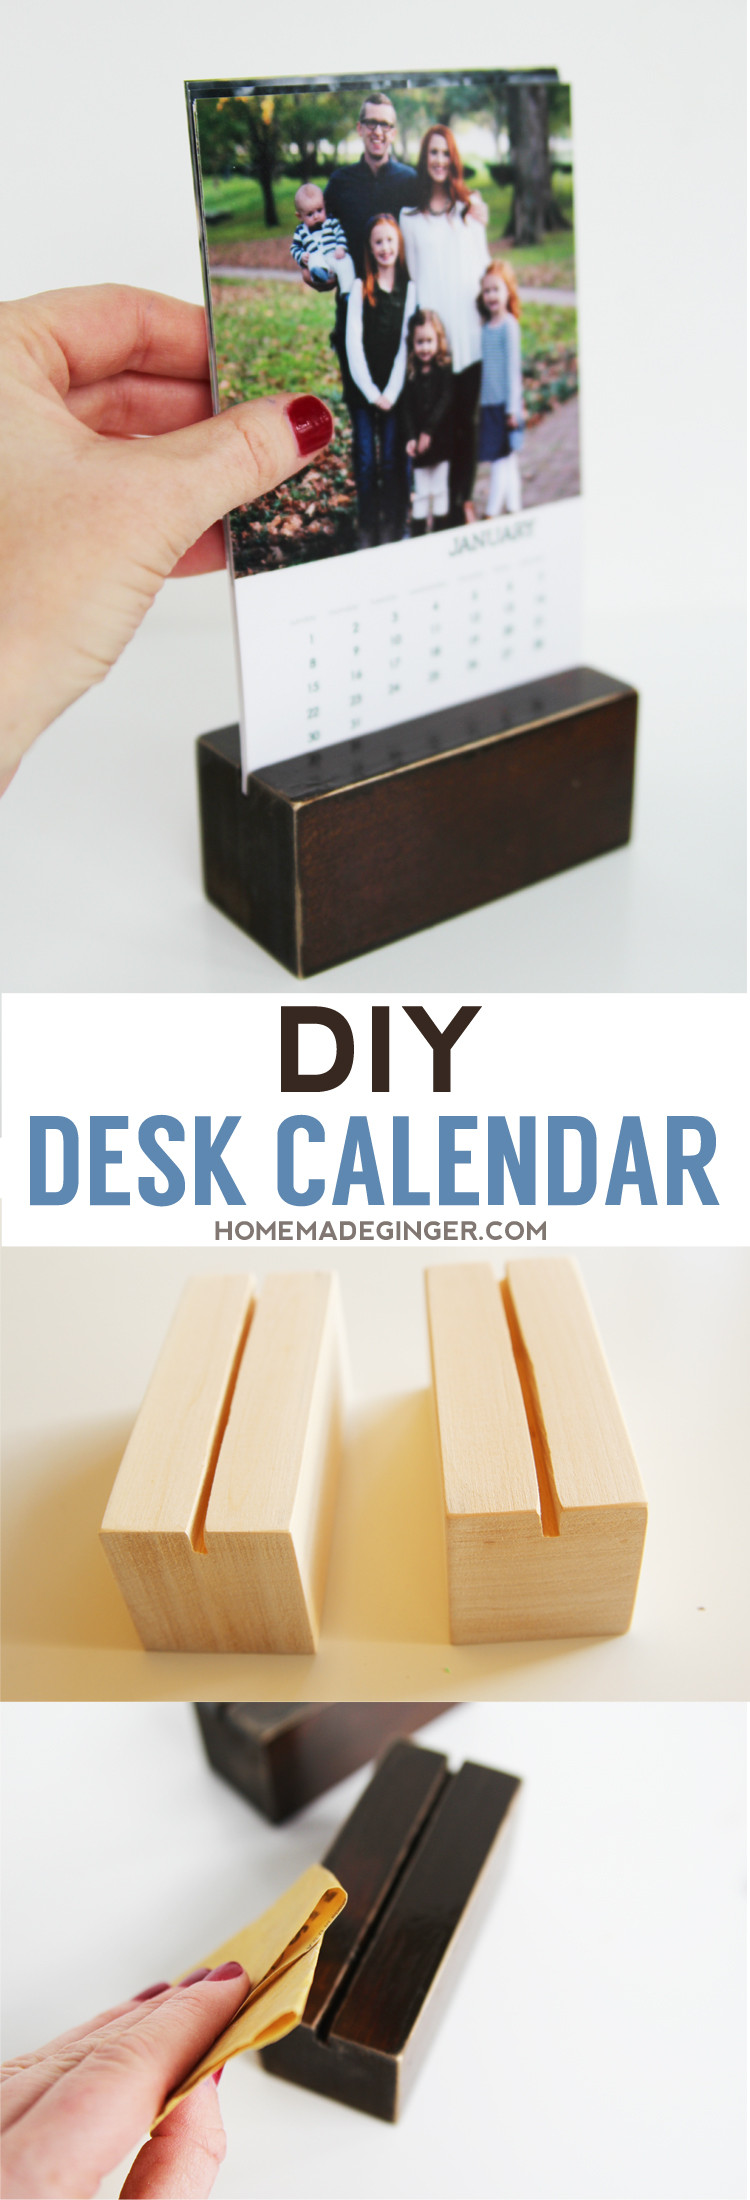 Best ideas about DIY Desk Calendar
. Save or Pin How to Make a Desk Calendar Homemade Ginger Now.